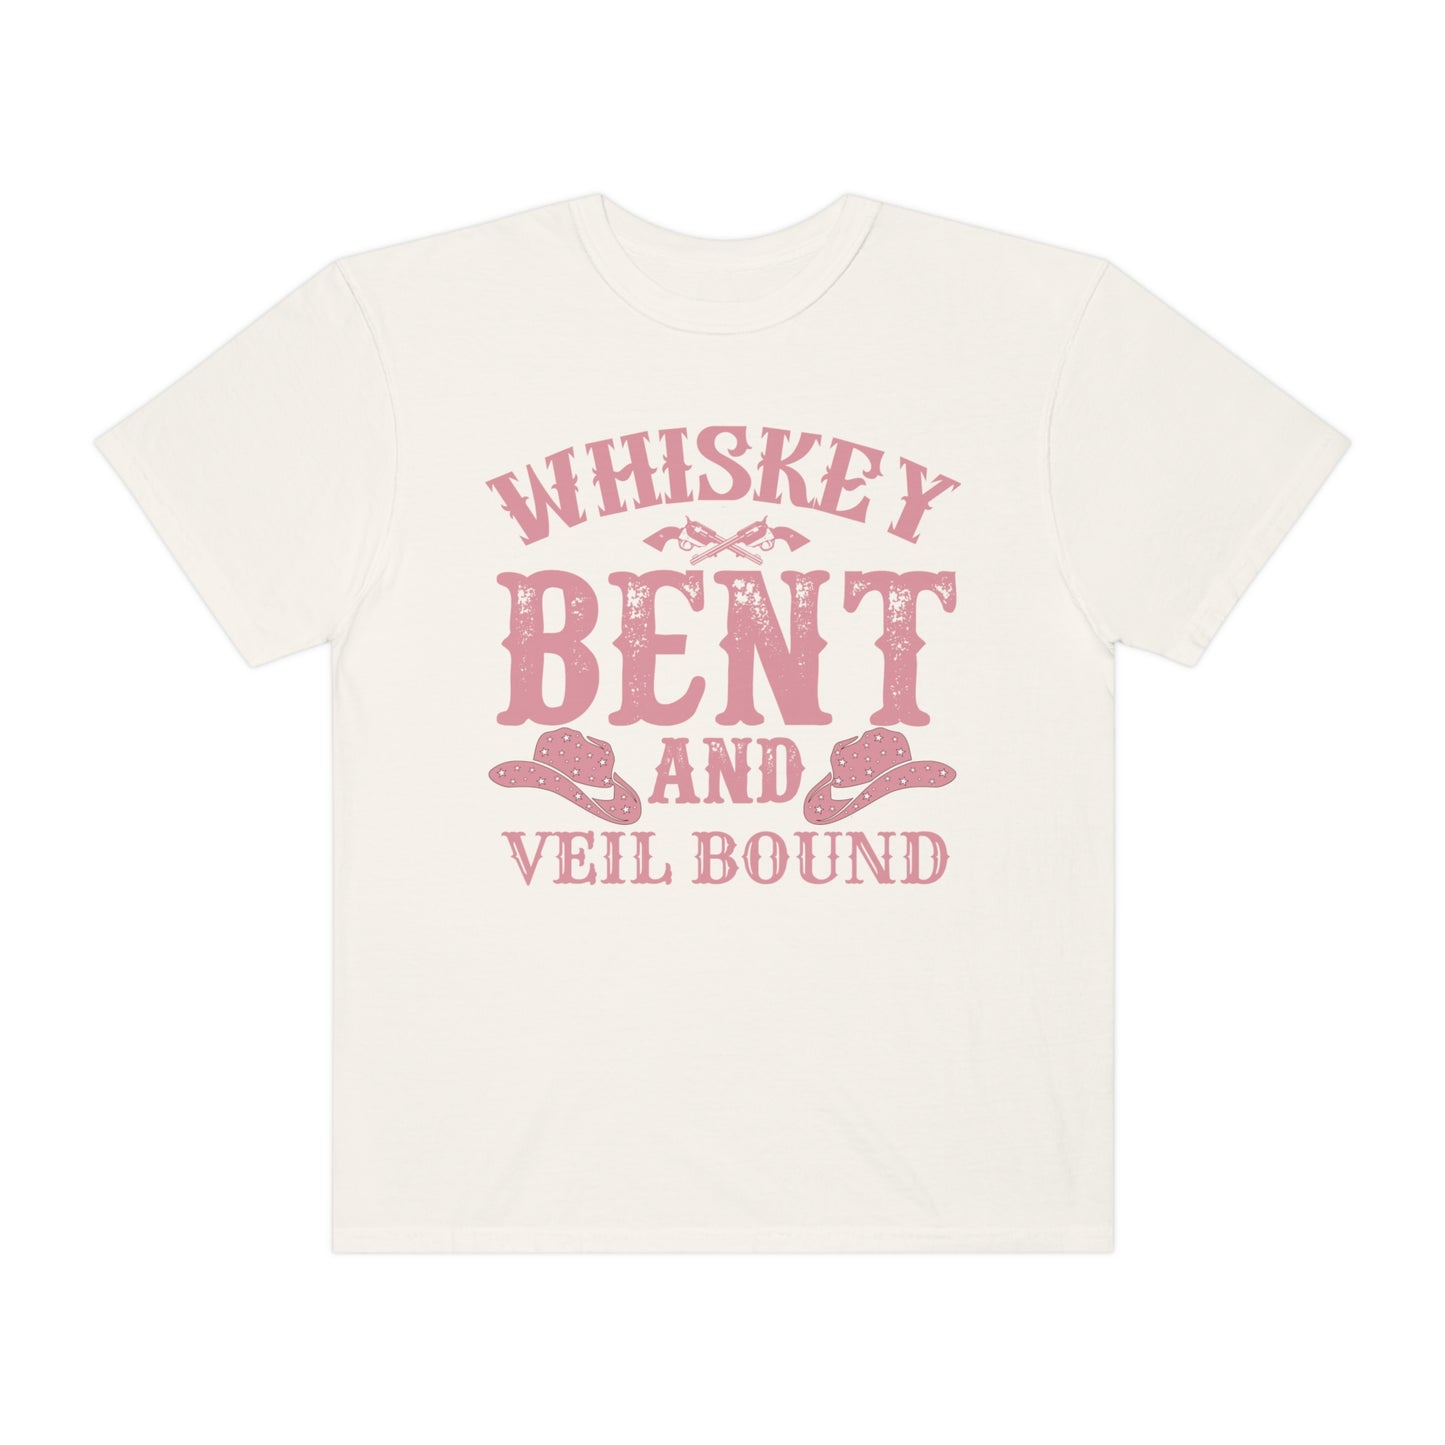 Whiskey Bent And Veil Bound Shirt